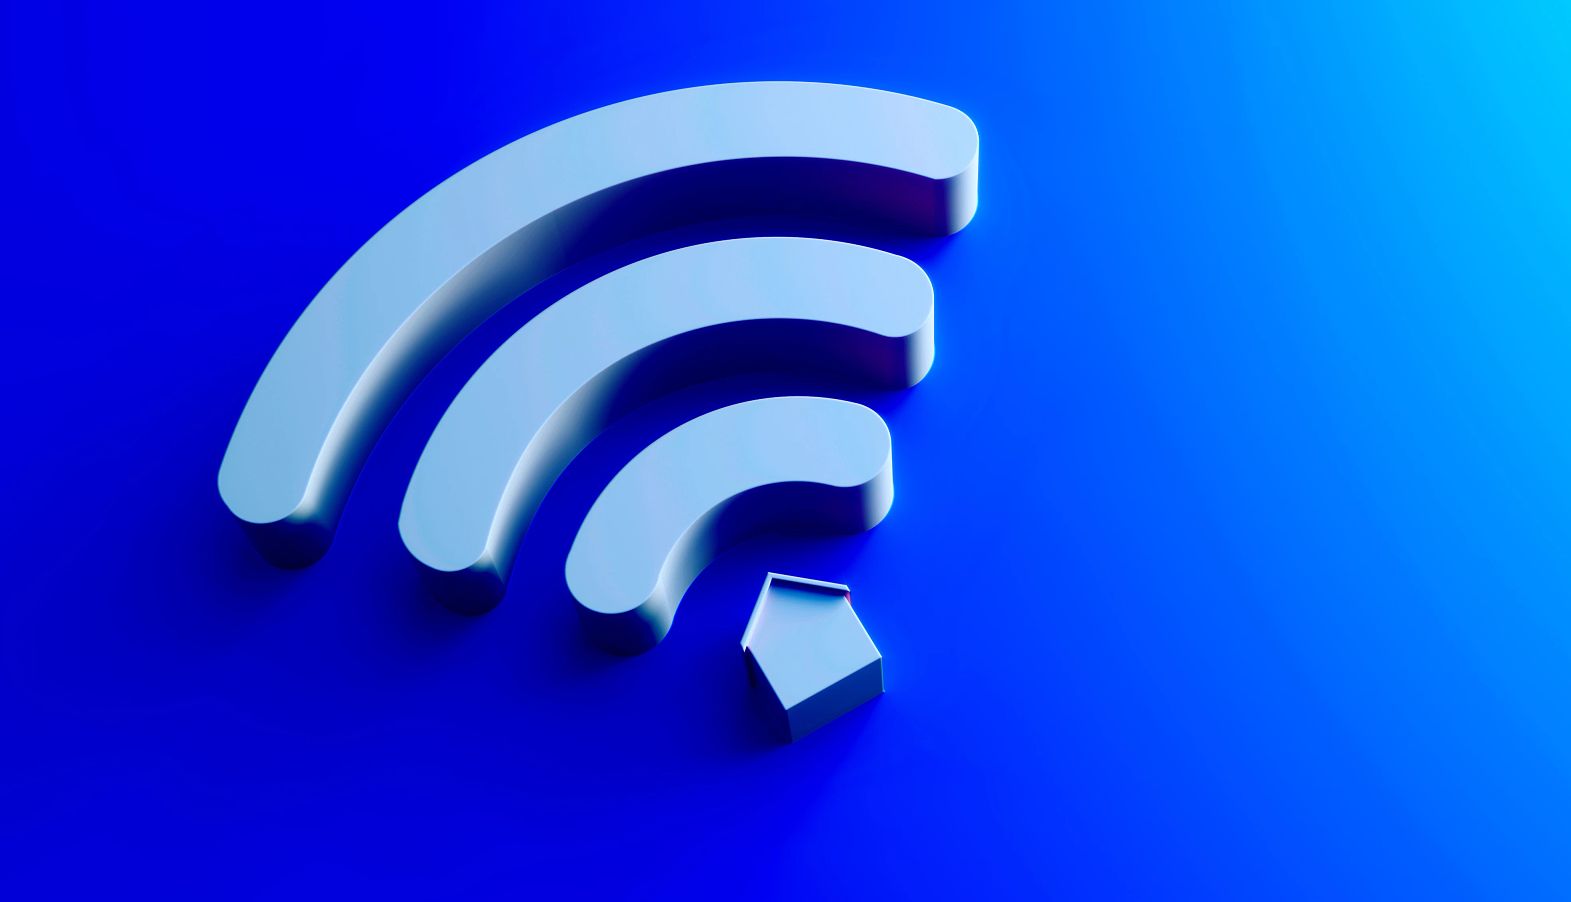 smart home symbol on a blue background